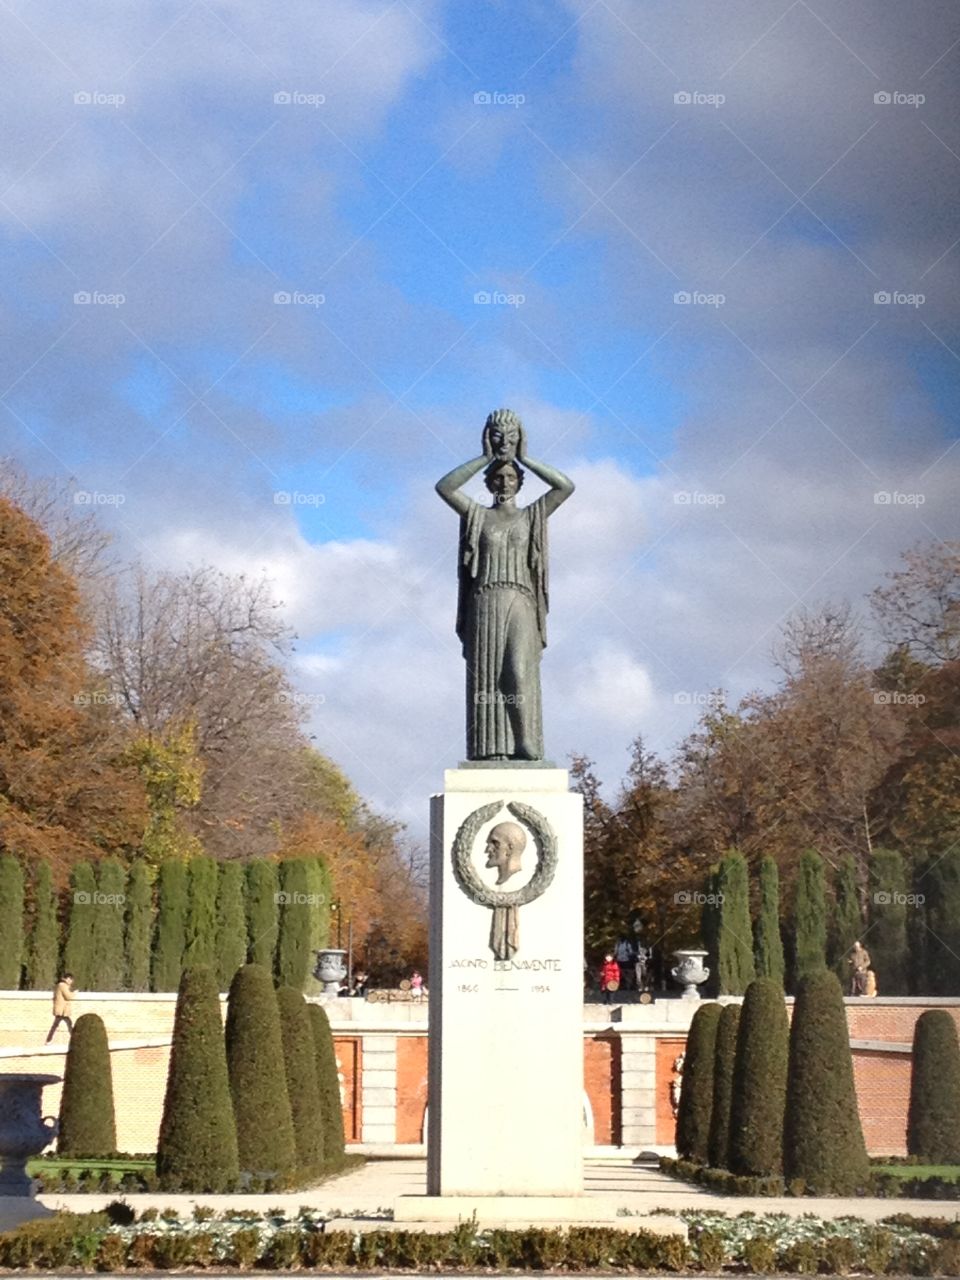 Park Statue. Madrid Buen Retiro park monument art sculpture trees stone 1500s architecture historic beauty outdoors 